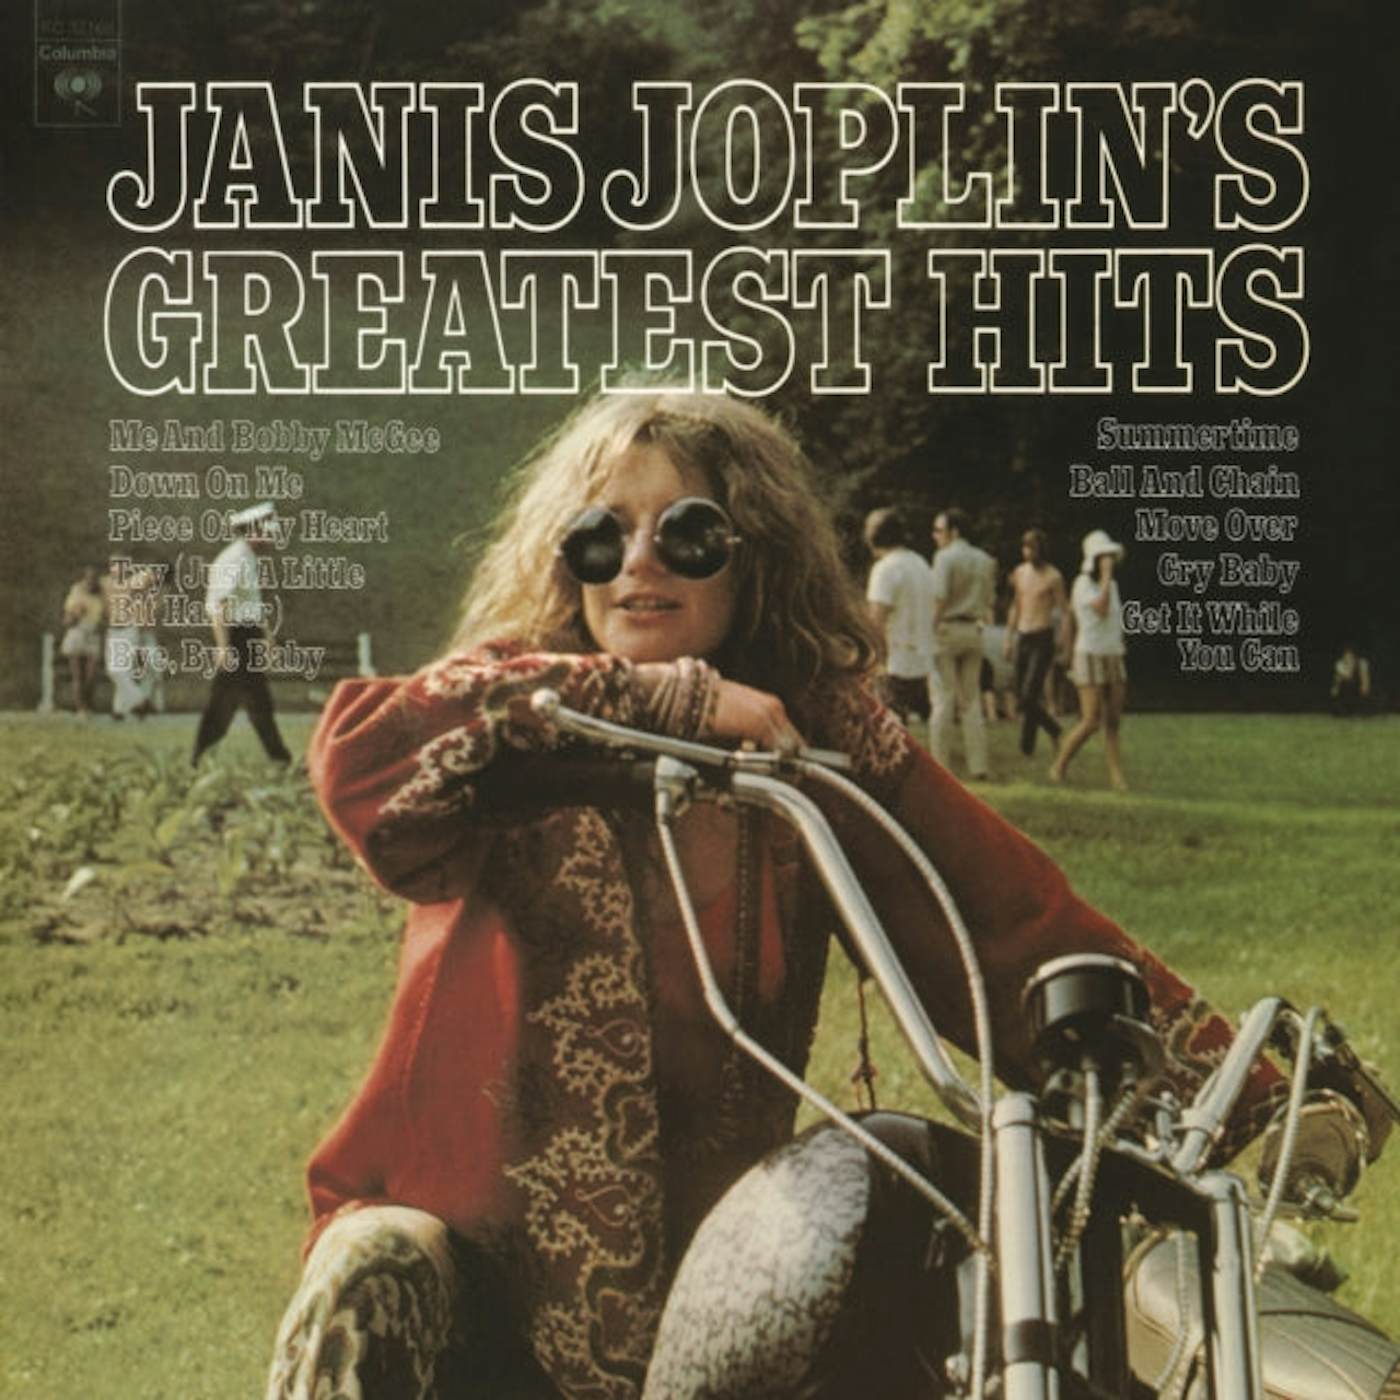 Janis Joplin LP Vinyl Record - Greatest Hits